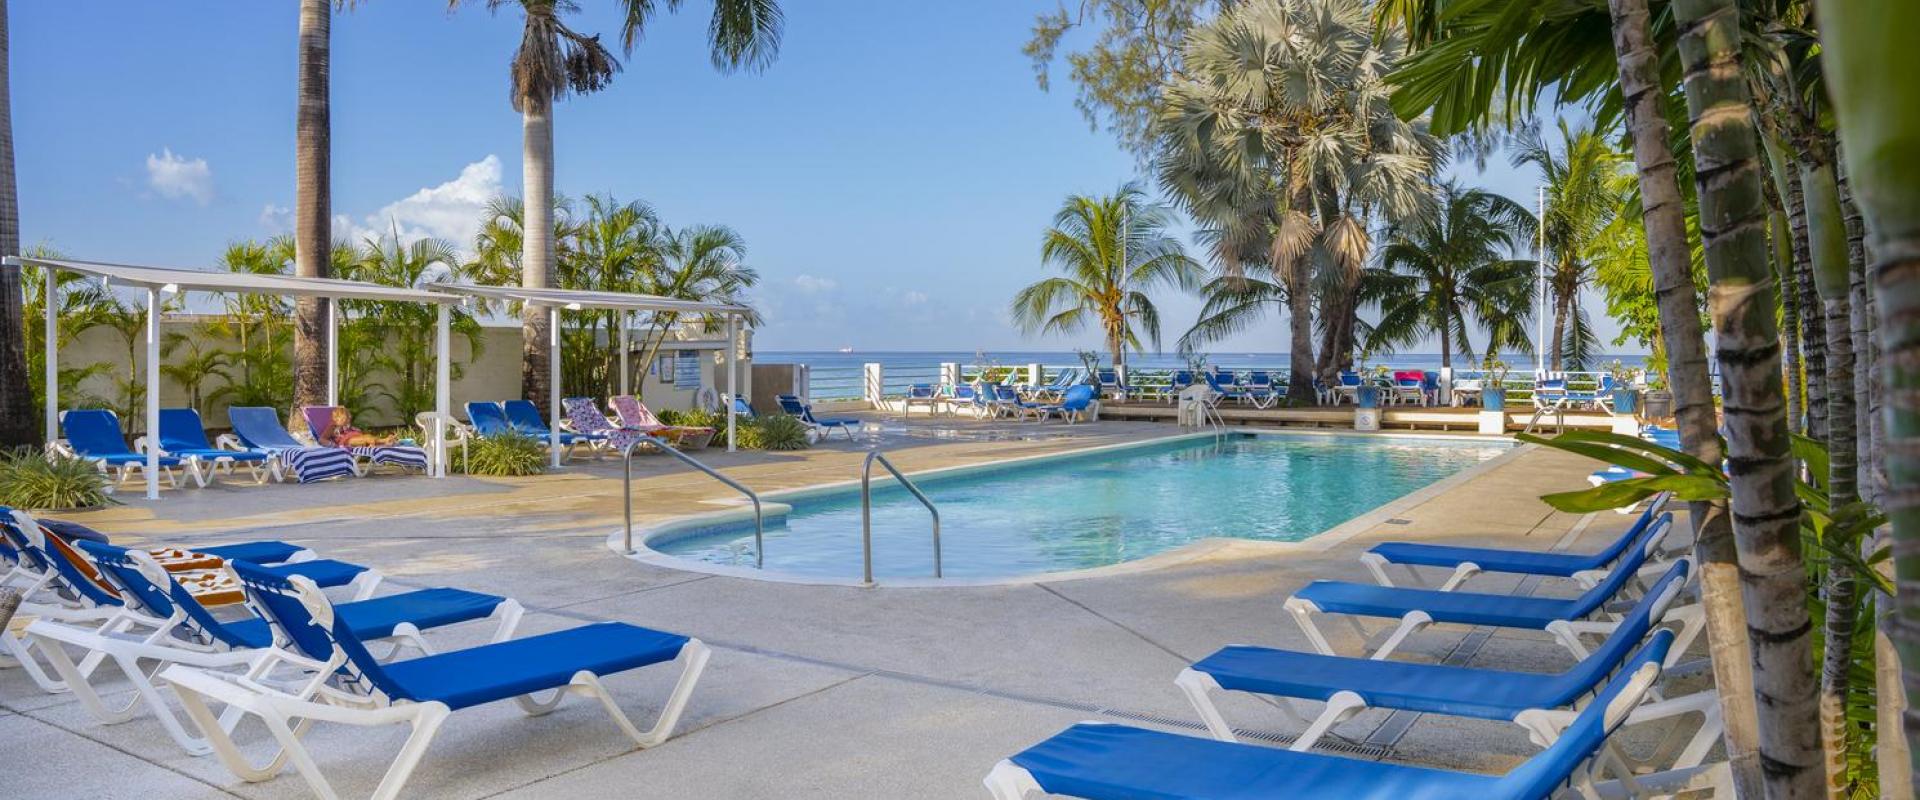 Tara Barbados 4 Bedroom Holiday Rental Villa Beach Club Sun Loungers